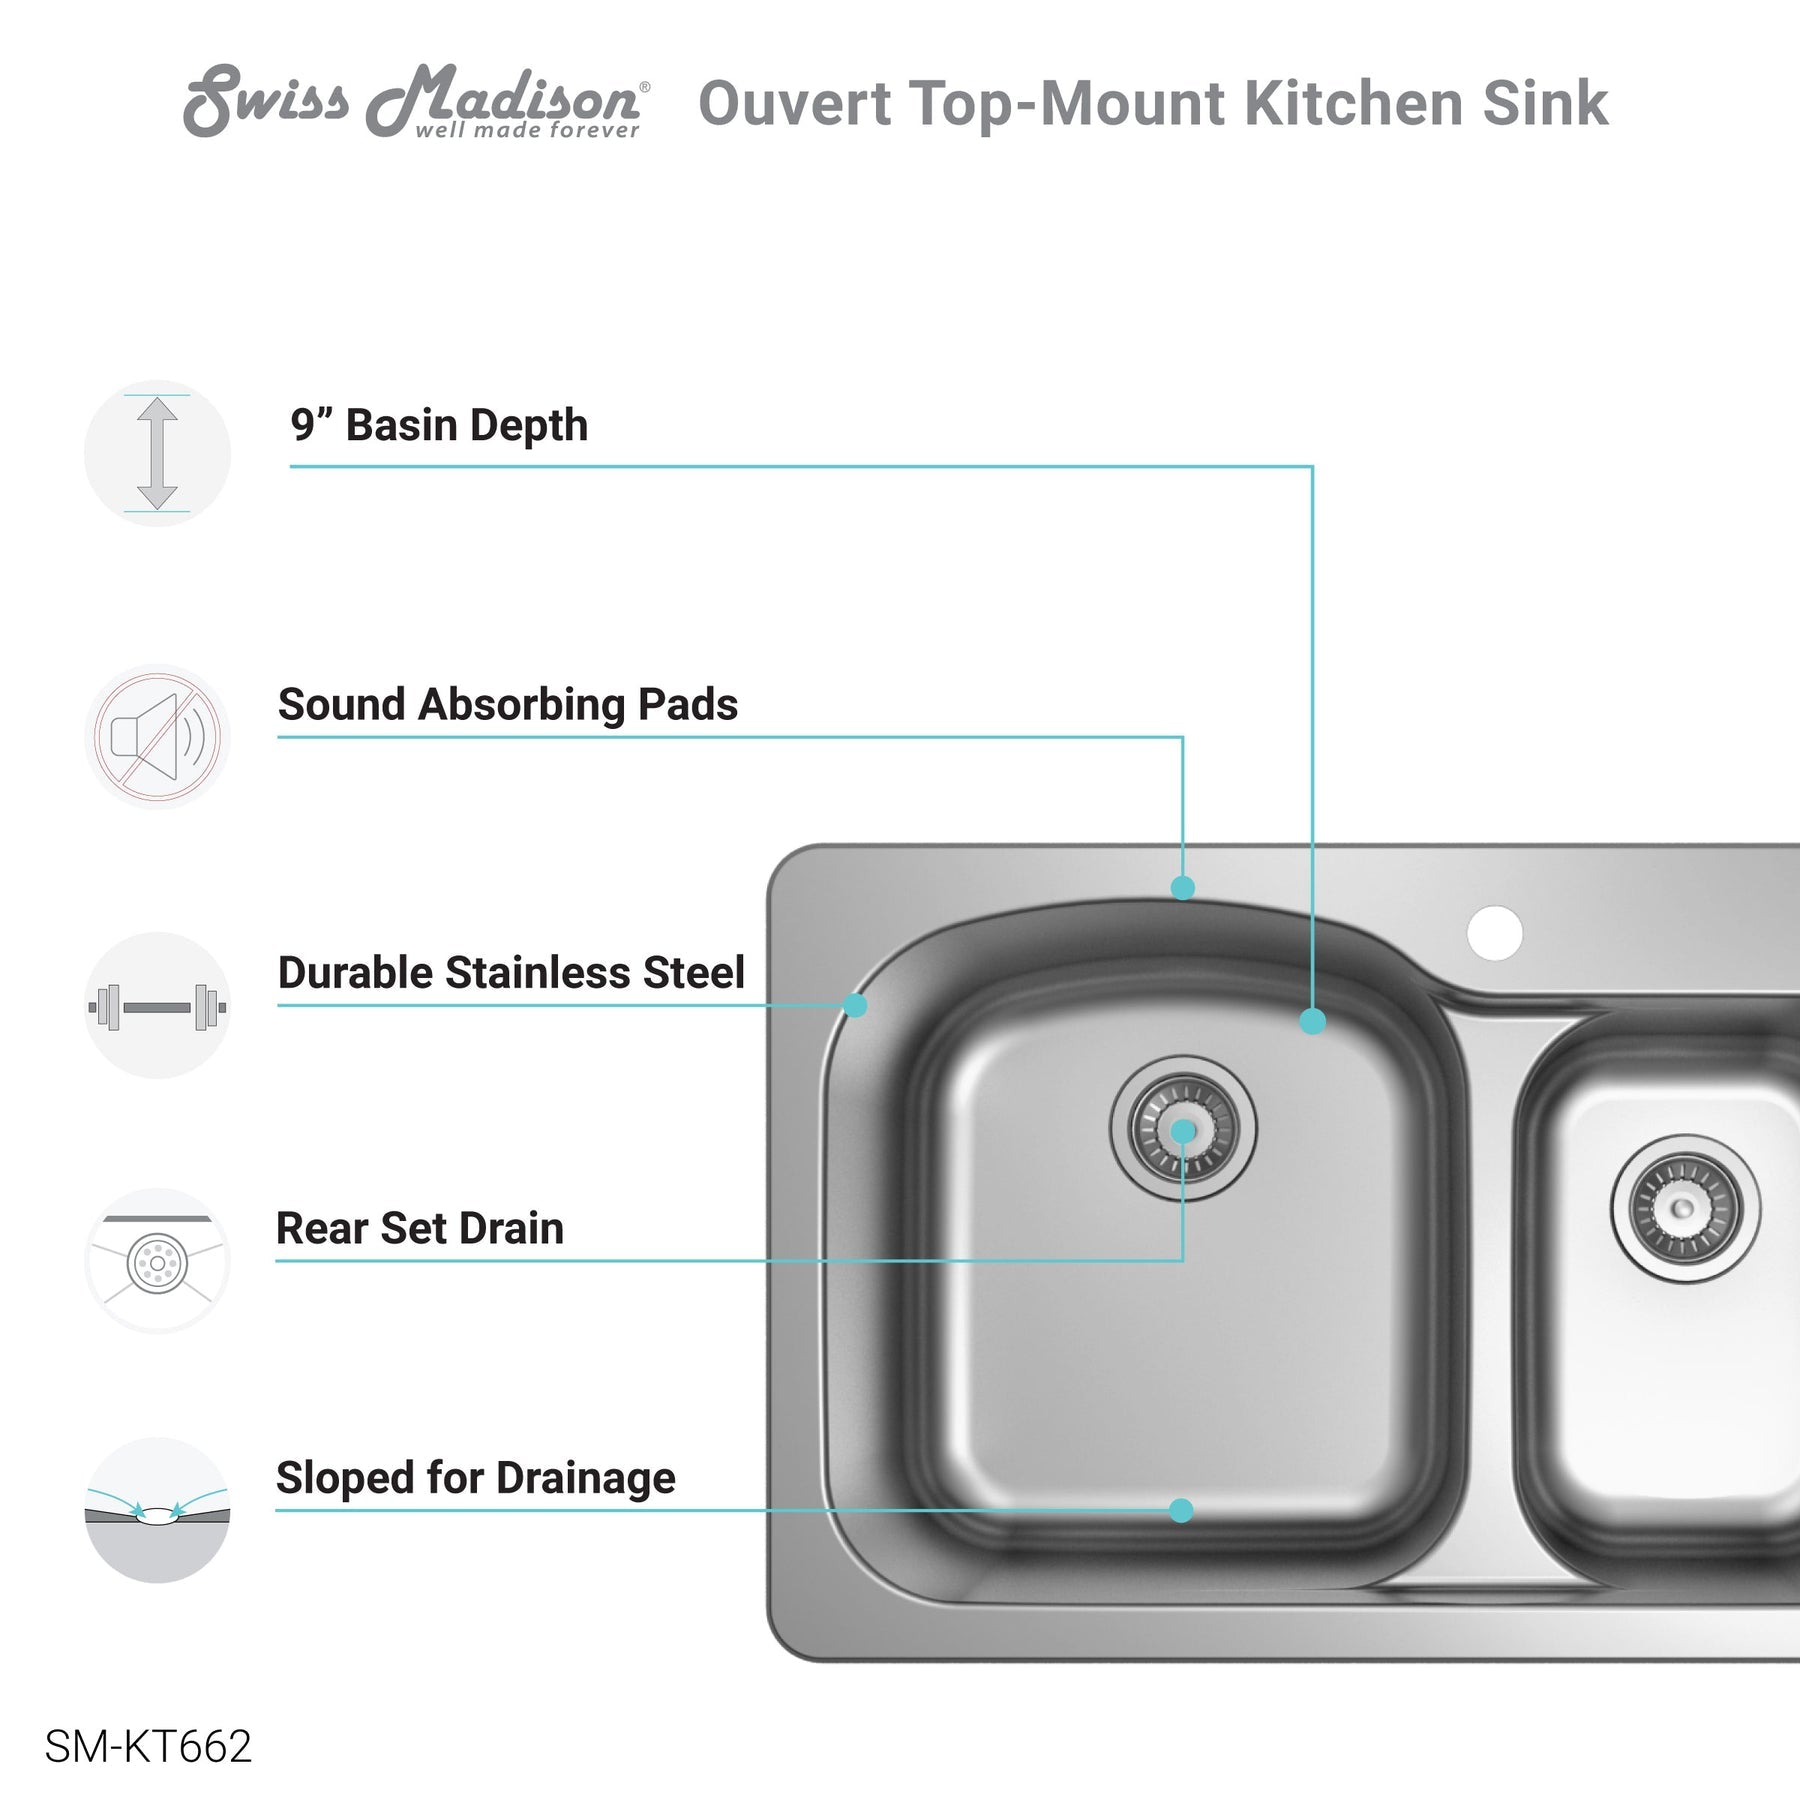 Swiss Madison Ouvert 33 x 22 Dual Basin, Top-Mount Kitchen Sink - SM-KT662